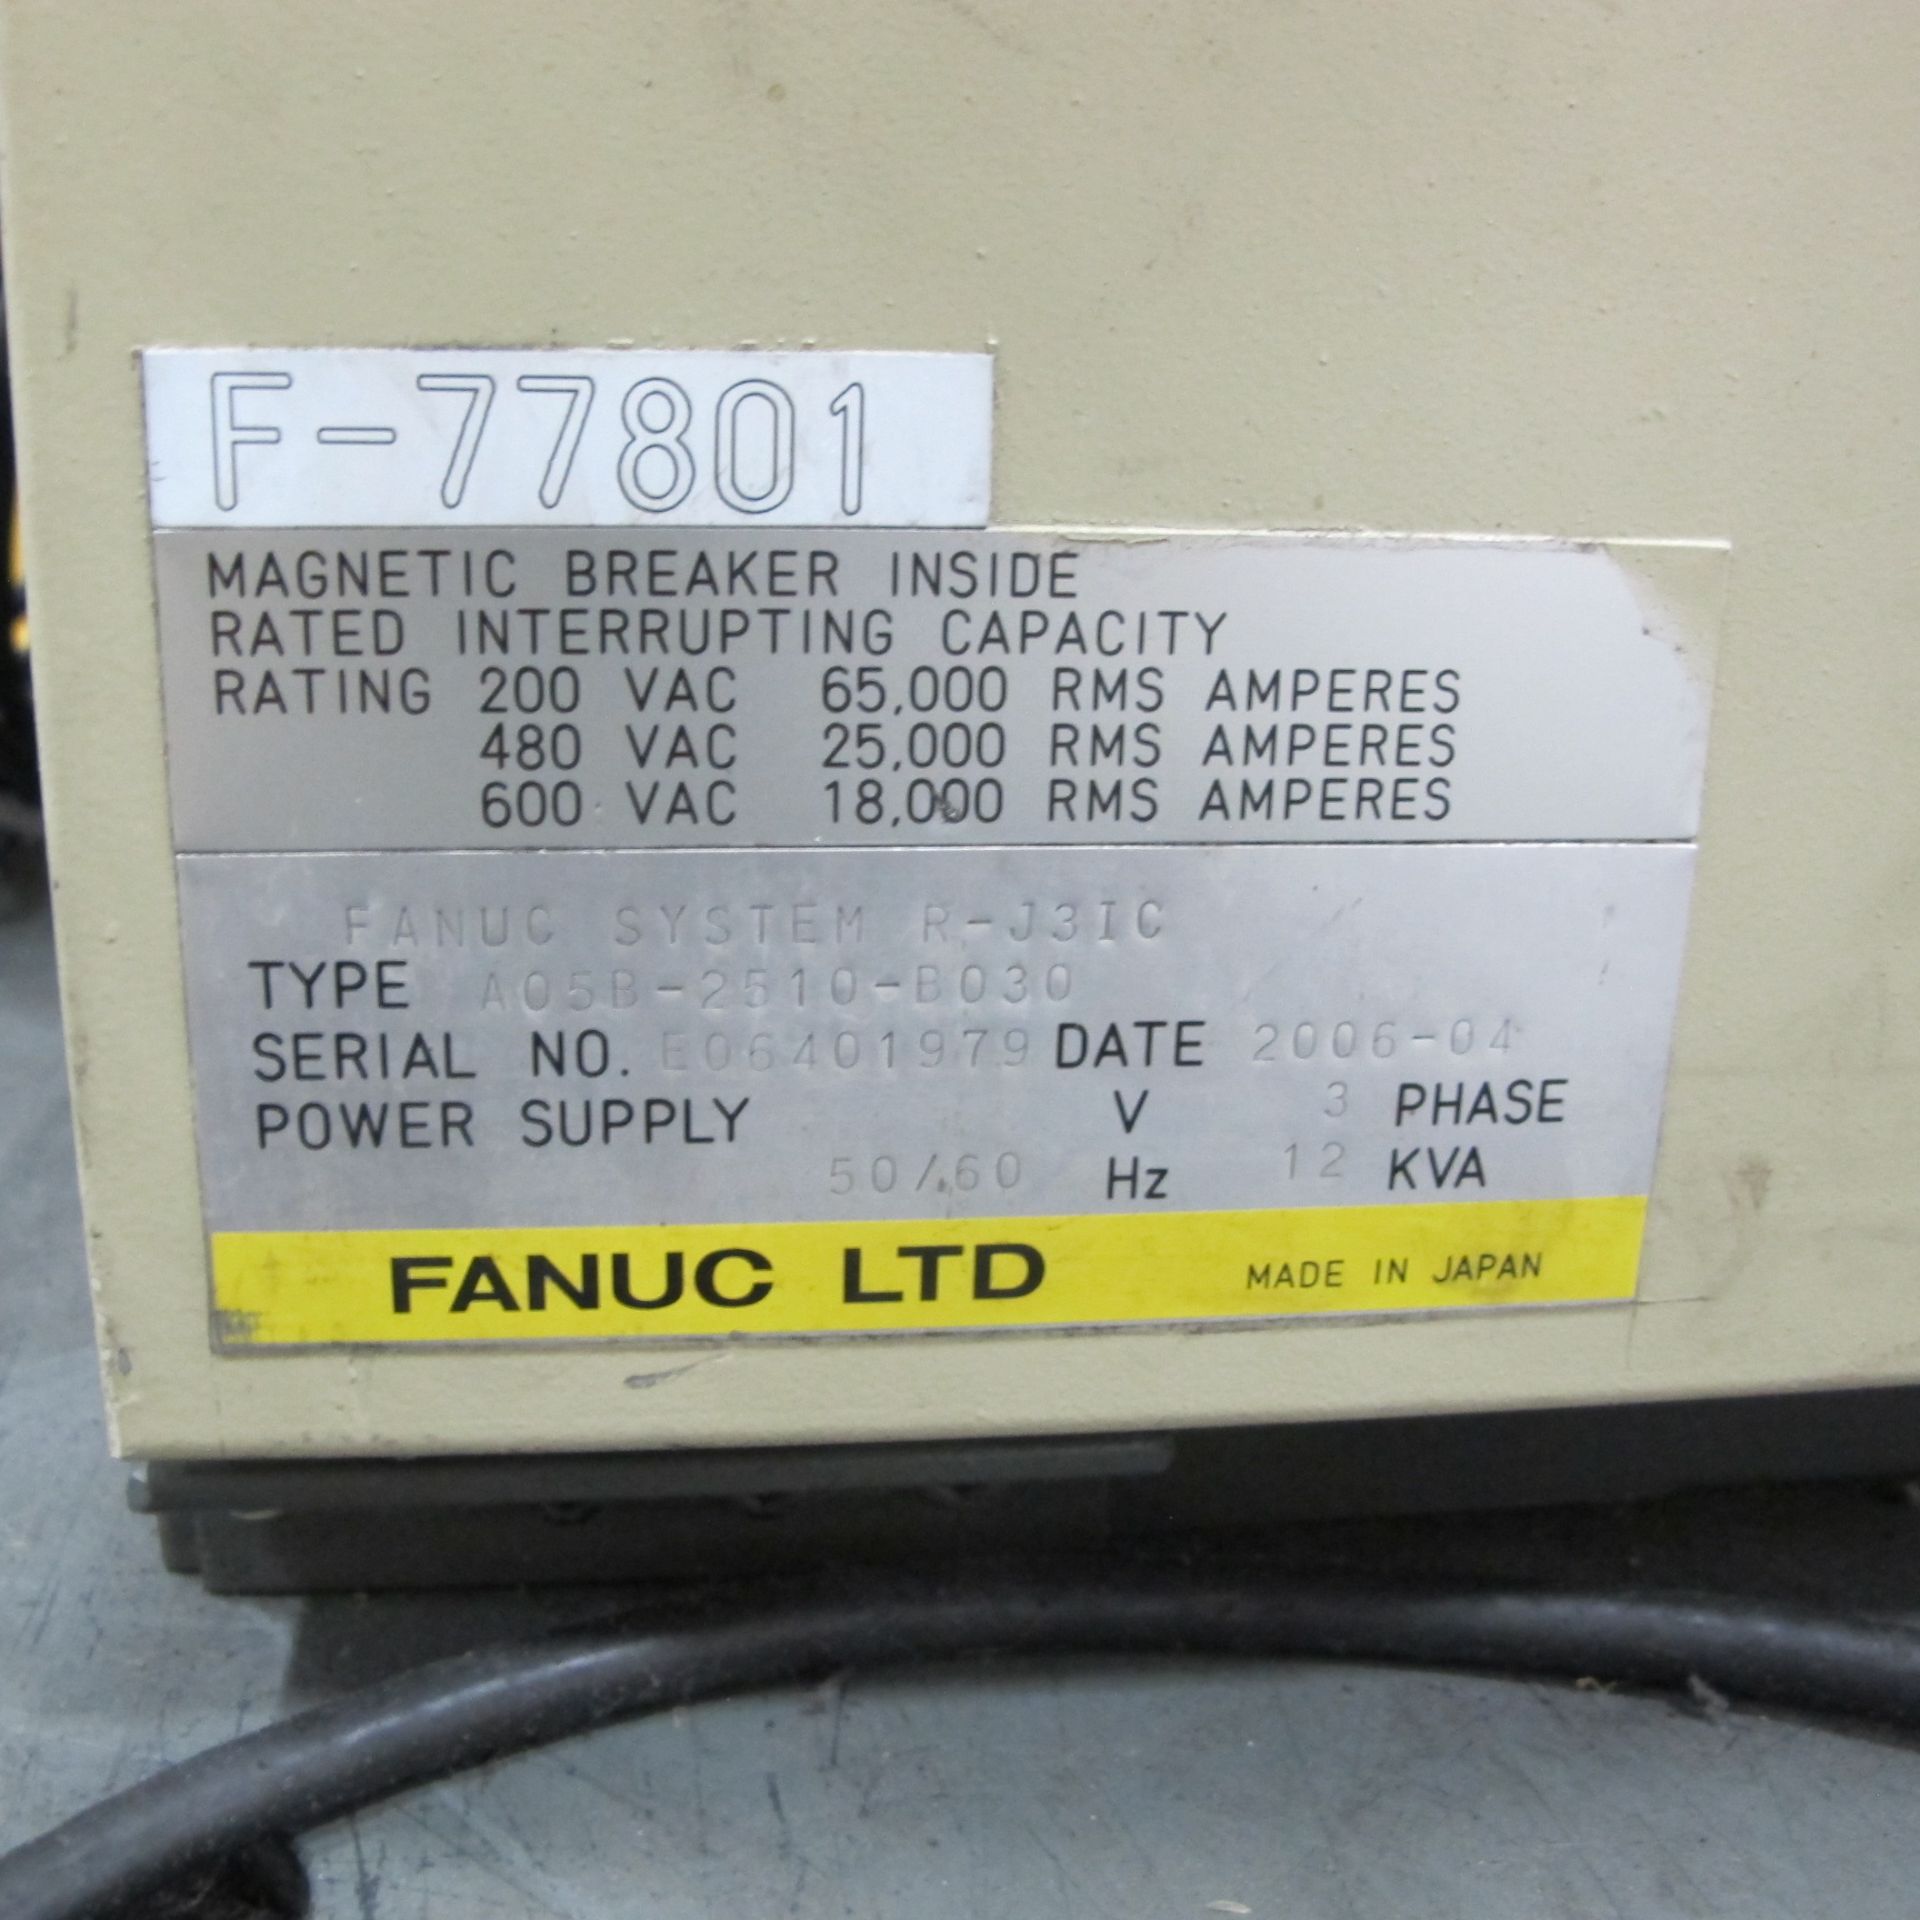 FANUC F-77801, 6 AXIS ROBOT R-2000i B/165F, S/N R06406769, W/FANUC SYSTEM R-J3iC CONTROL PANEL W/ - Image 5 of 6